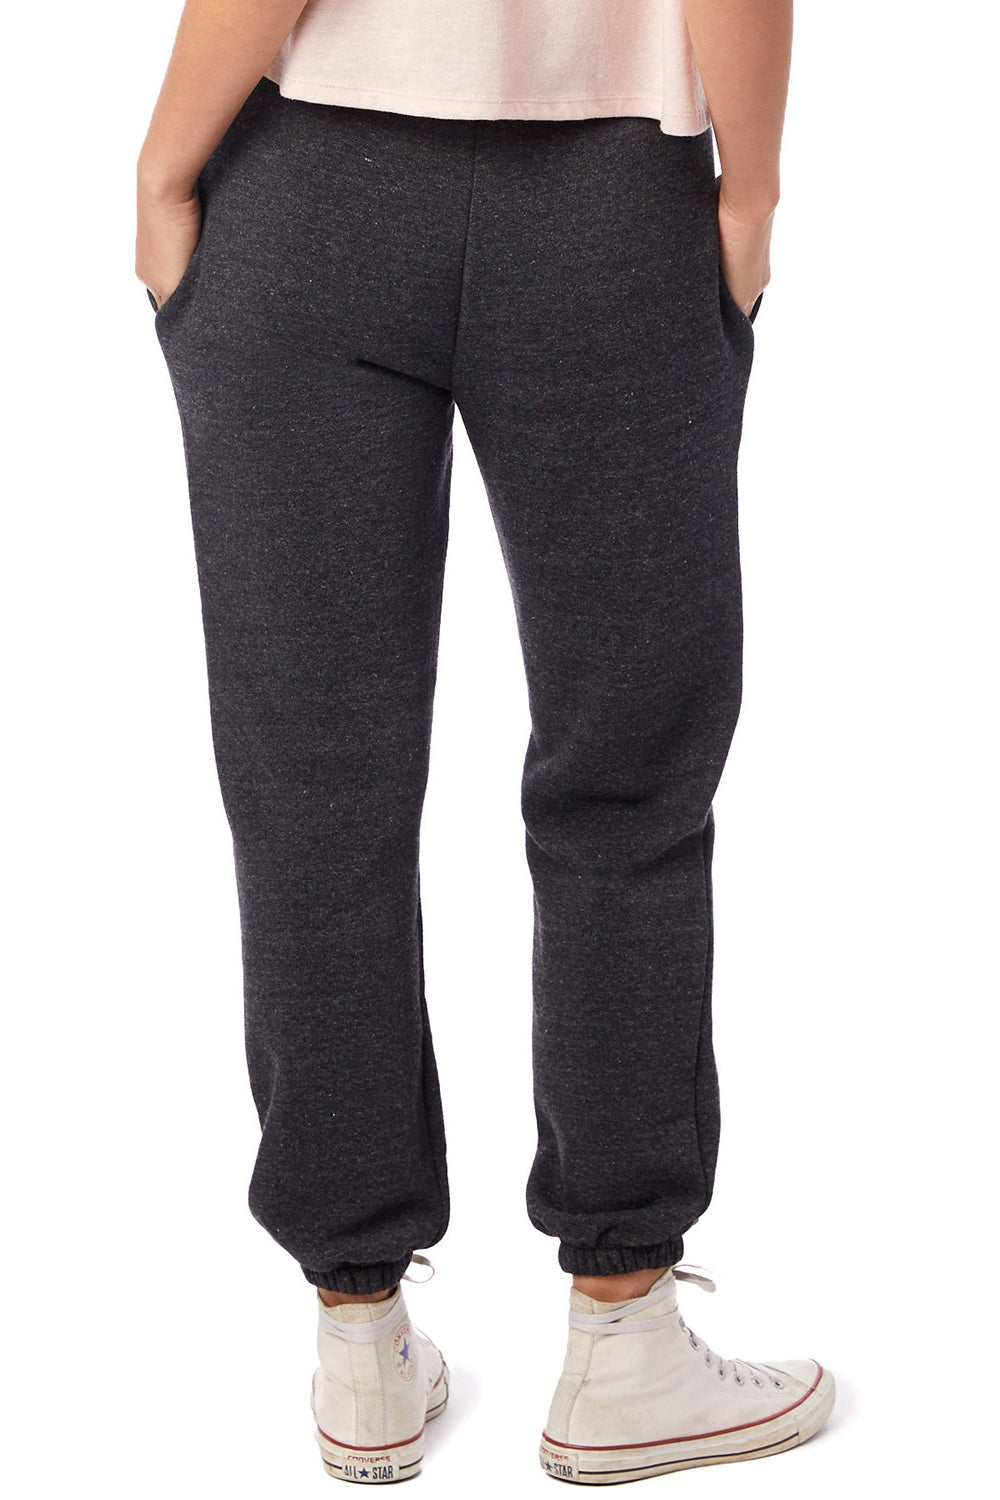 Alternative 9902F2 Womens Eco Classic Sweatpants w/ Pockets Black Model Back